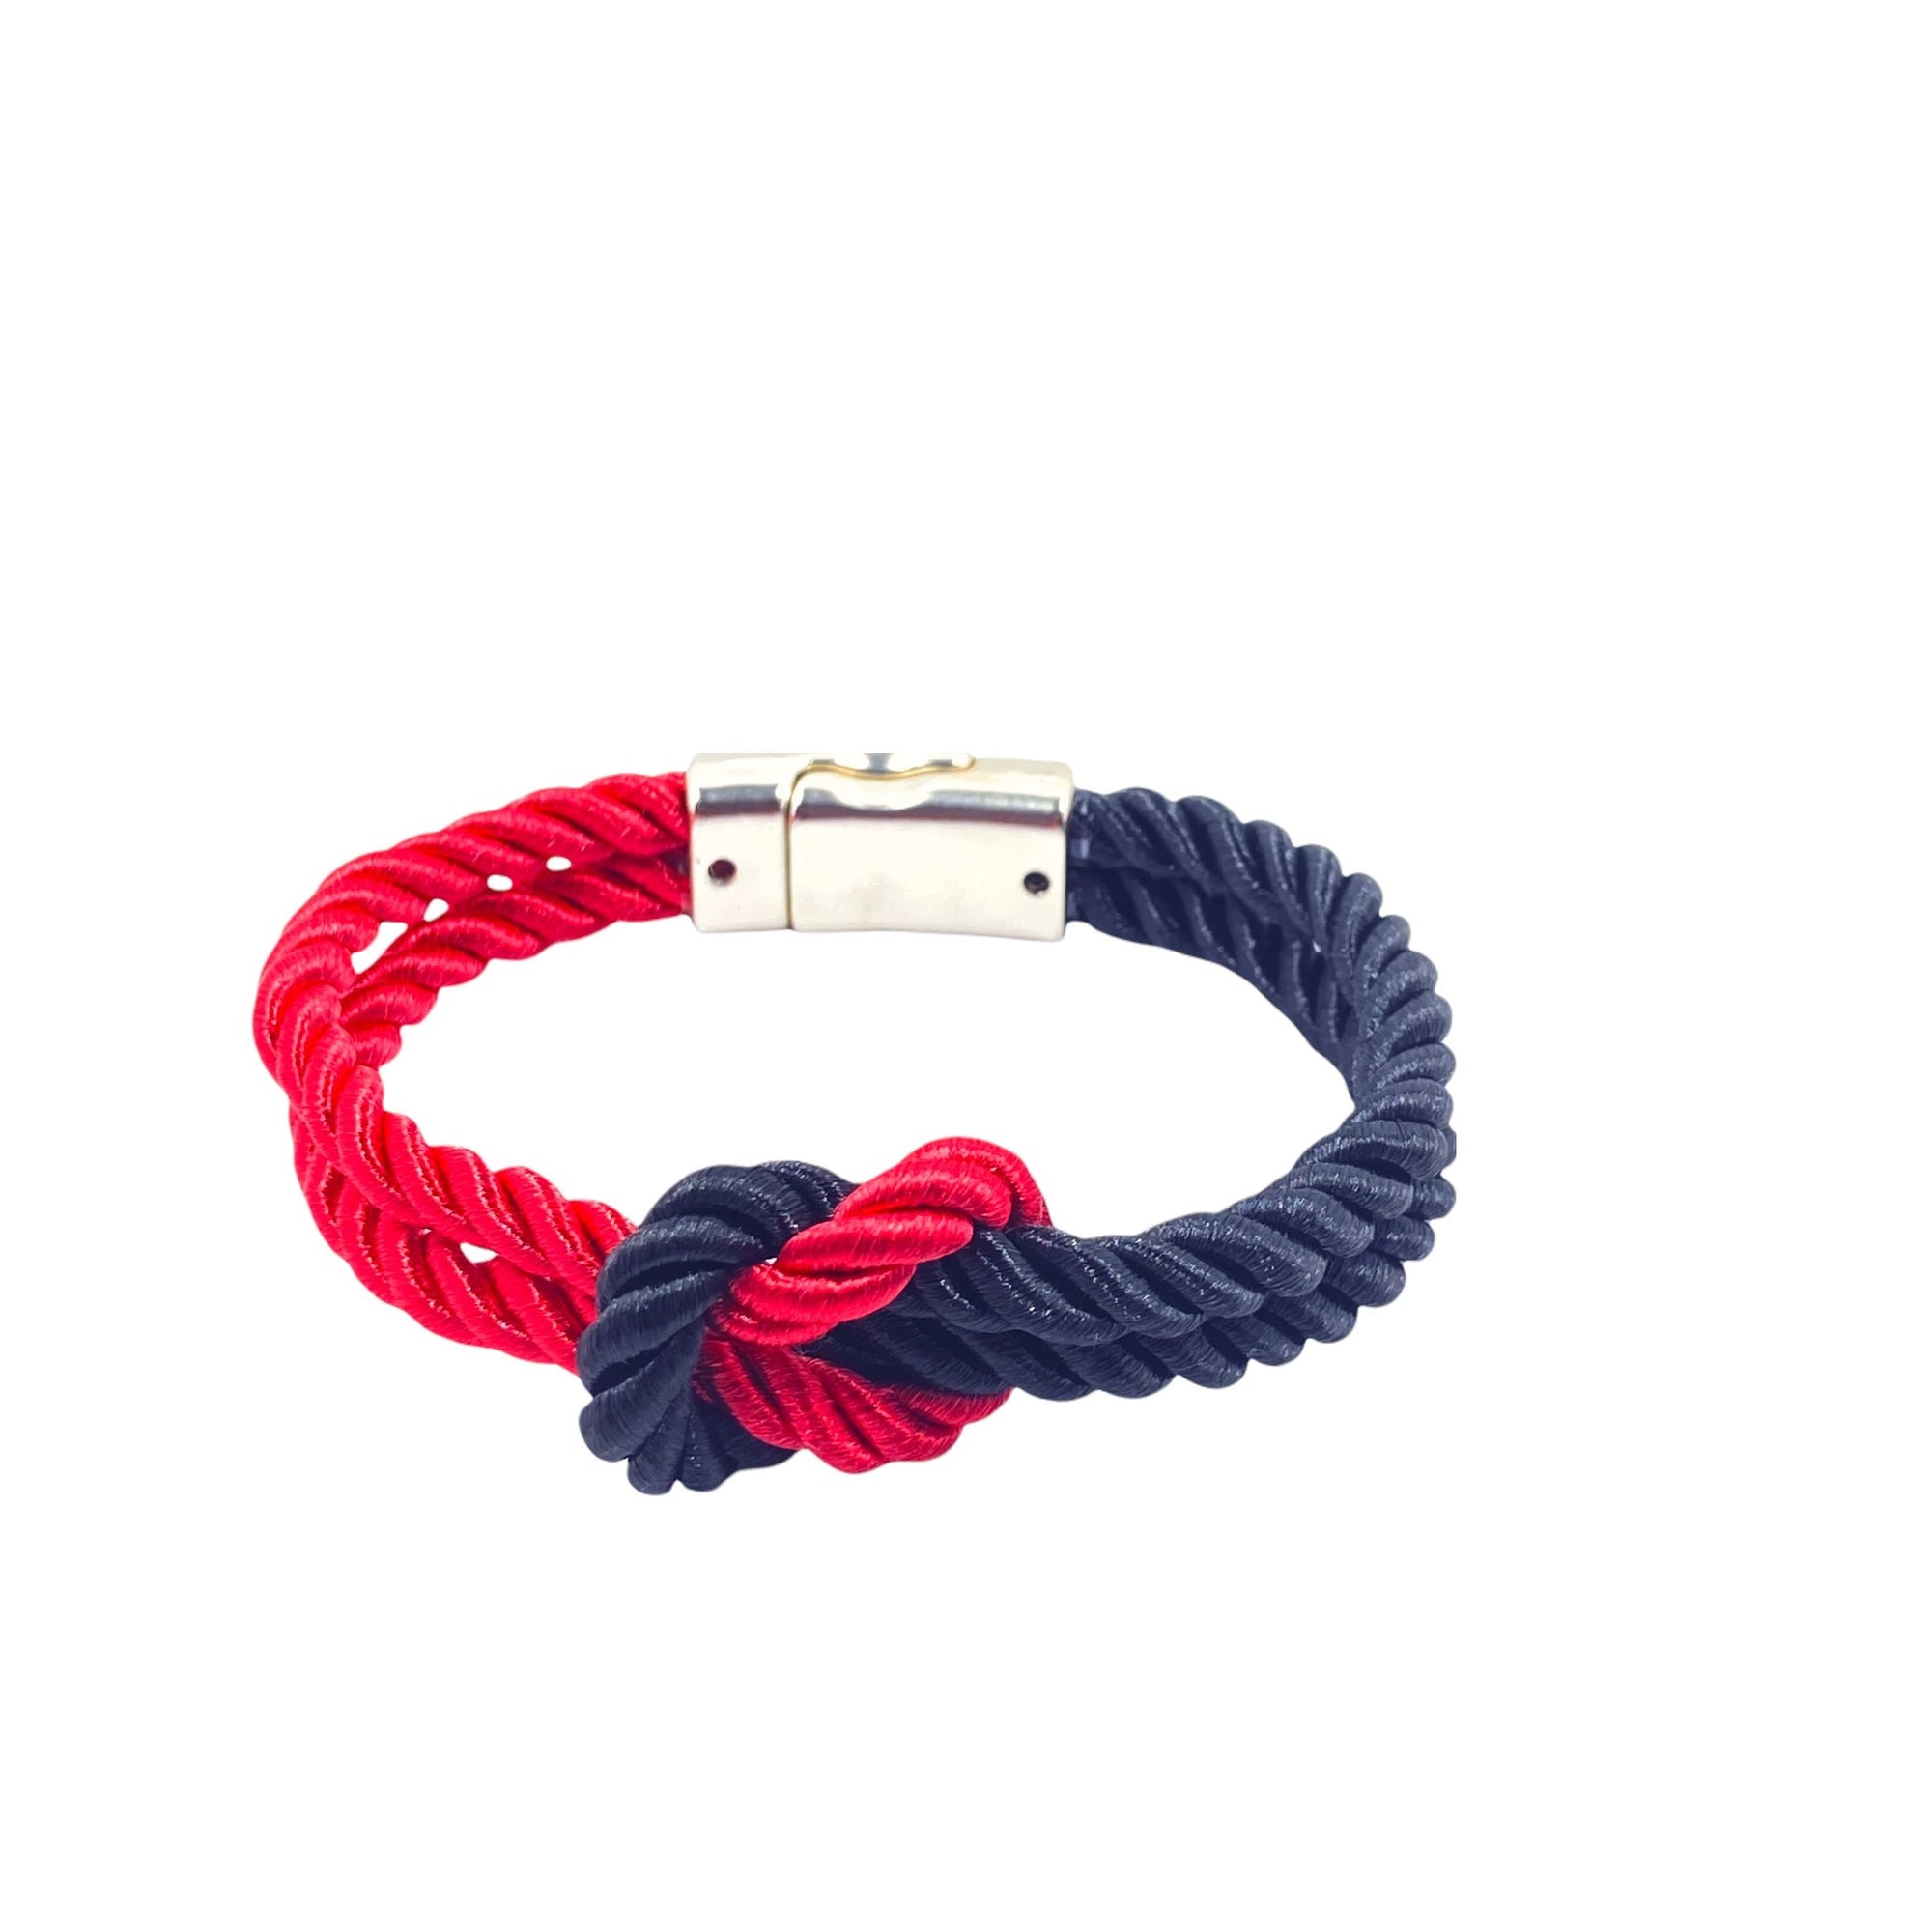 The Original Love Knot Satin Rope Bracelet- Black and Red Bracelets Trendzio Black and Red 